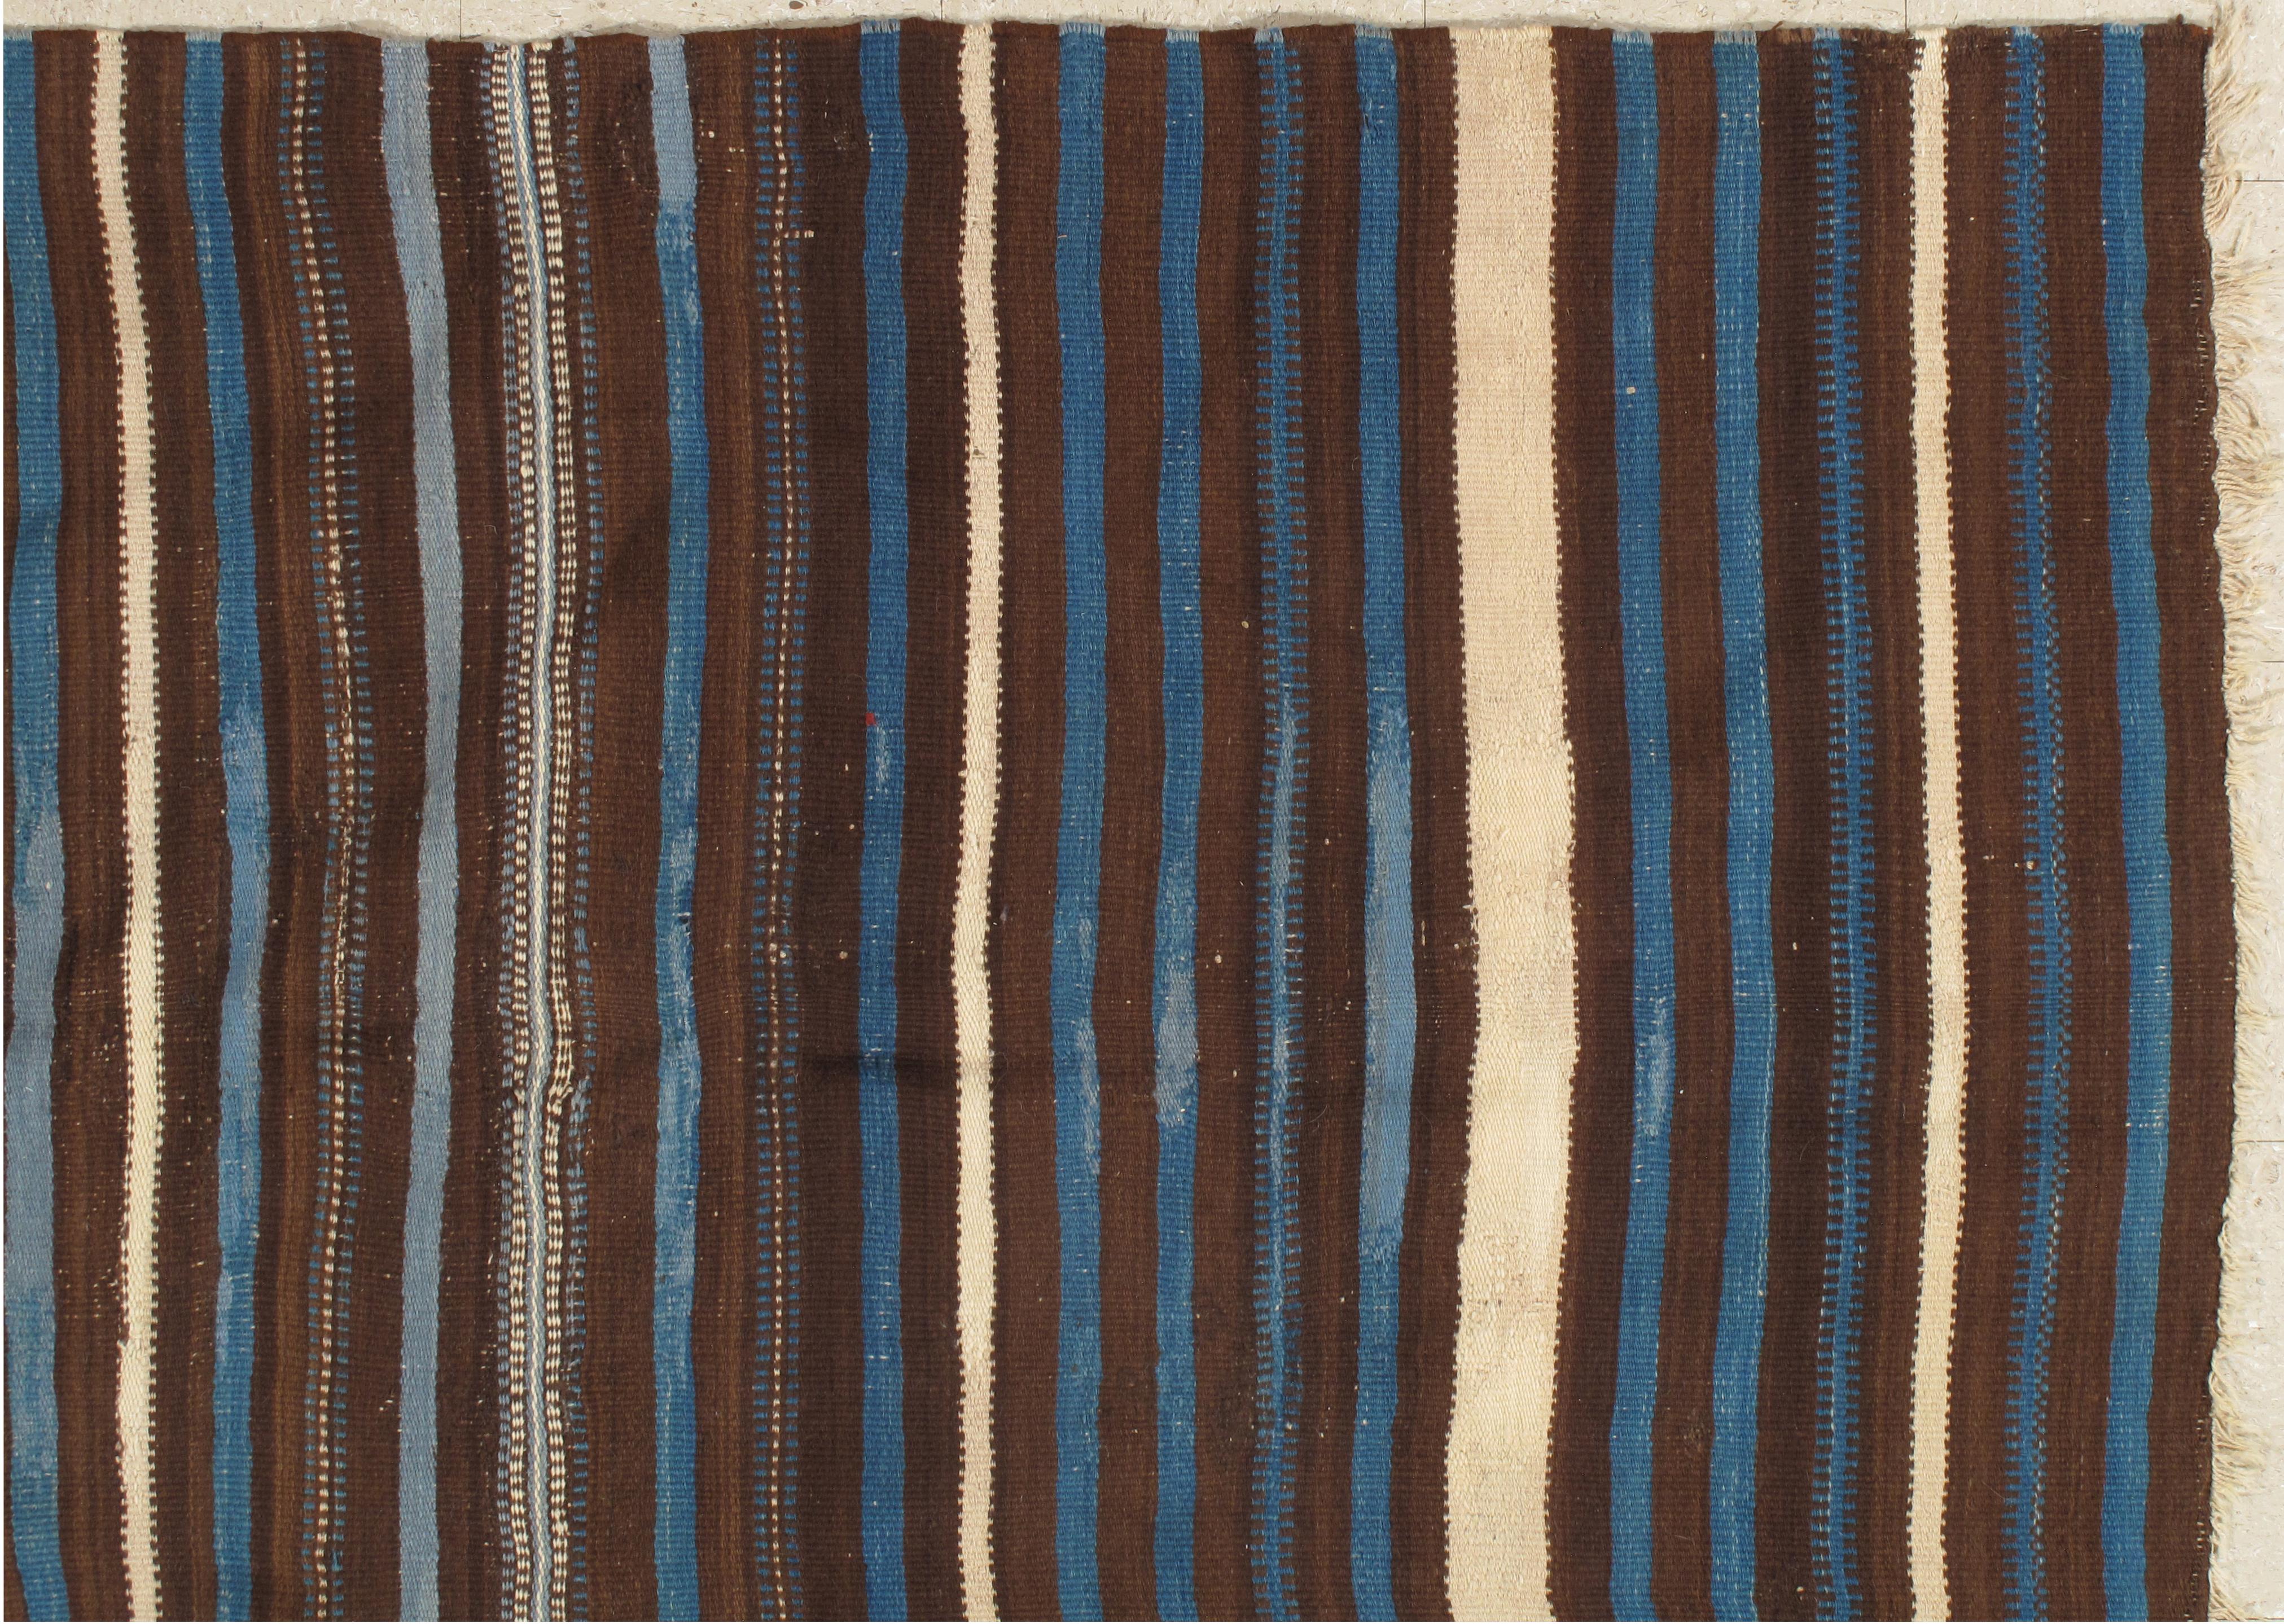 Rare find: Navajo Indian Rio Grande blanket, circa 1860, all homespun (handspun wool) with indigo dye and natural brown and white, 4' x 7'2